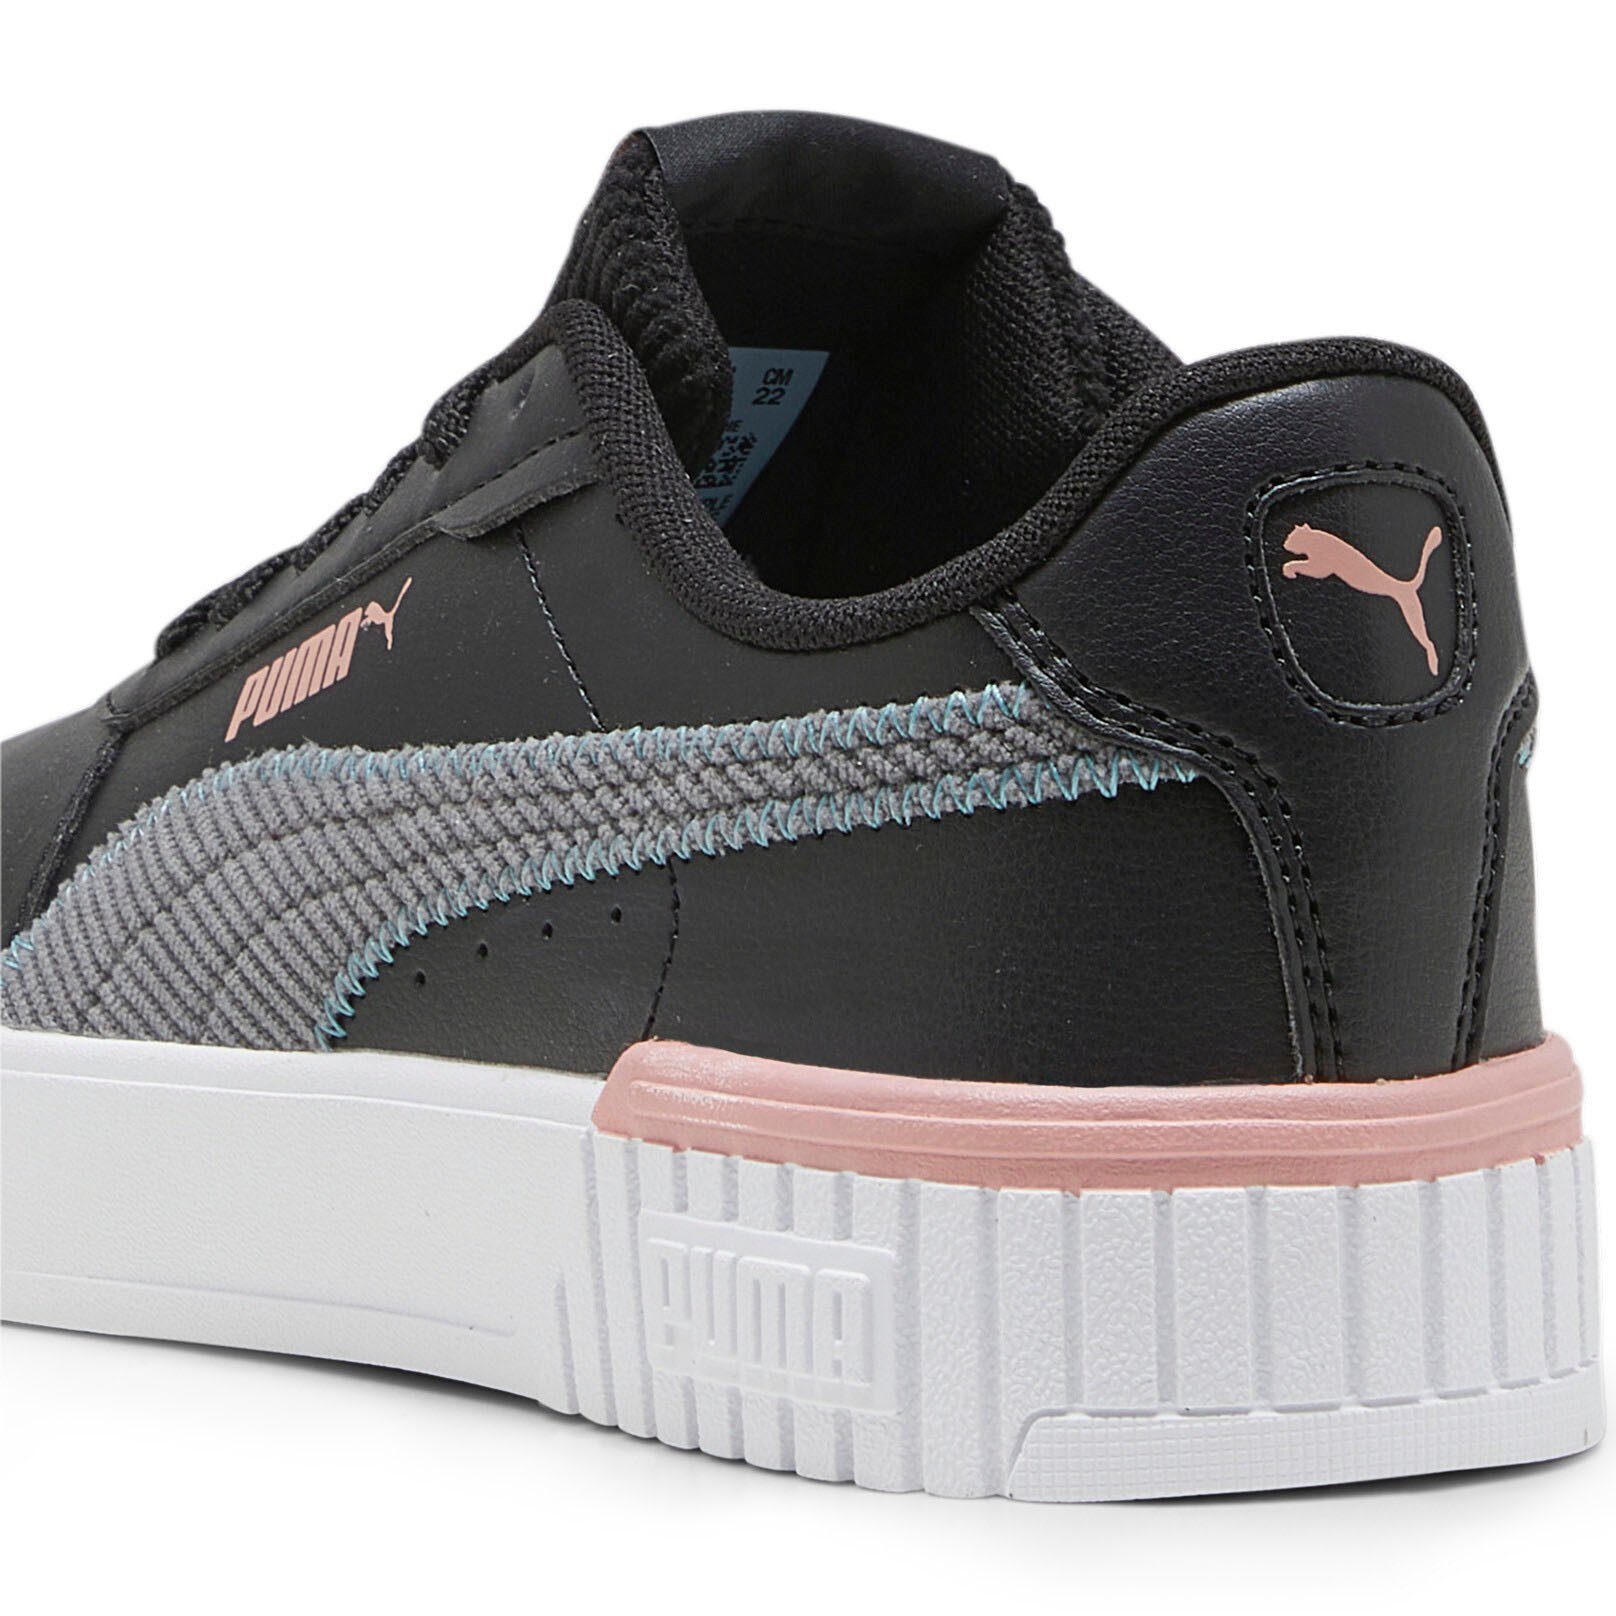 Pink-PUMA Black-Cool CORDUROY White Sneaker 2.0 PUMA Dark Blue-Future JR CARINA Gray-Bold PUMA